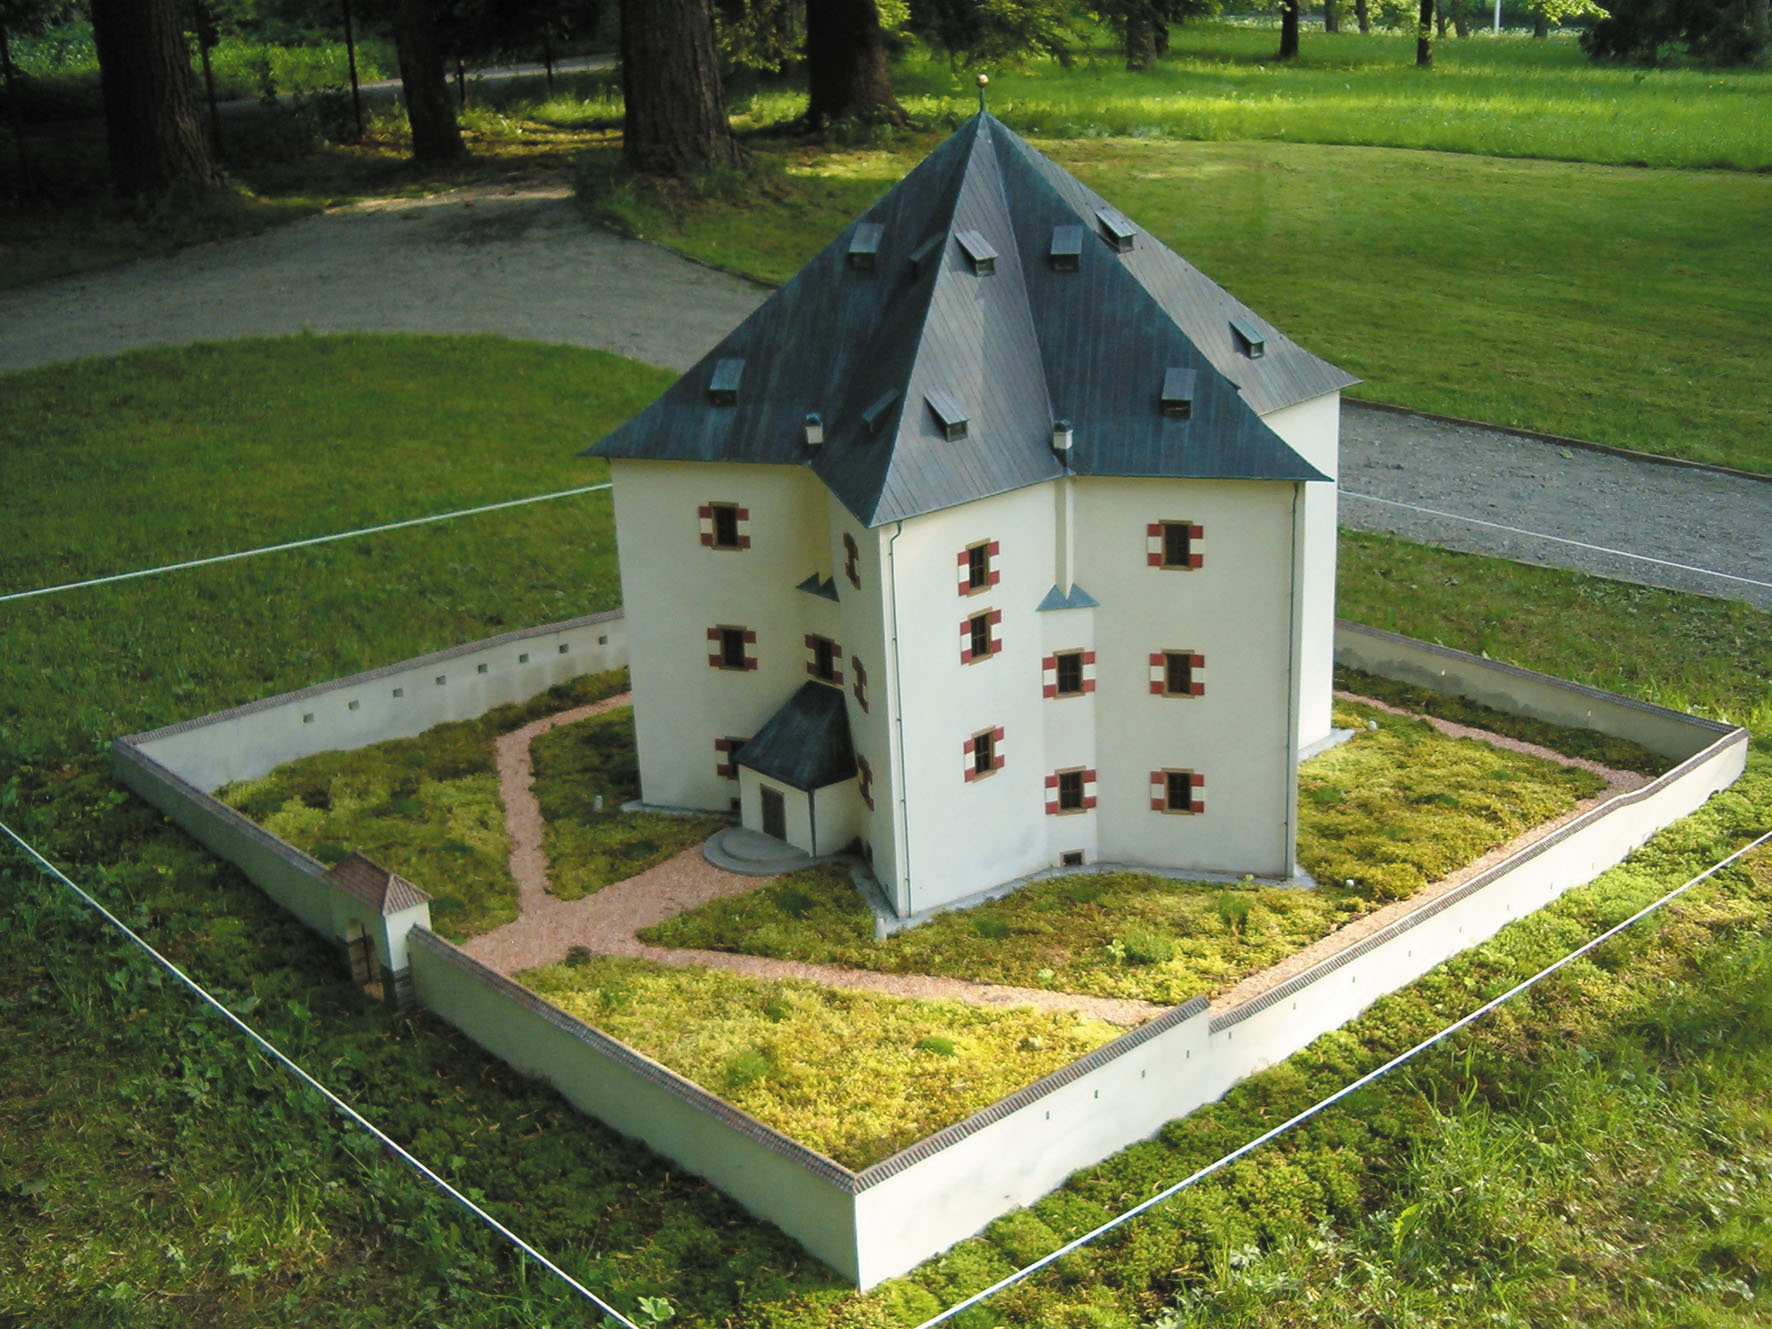 Schloss Stern (Modell im Park Boheminium)